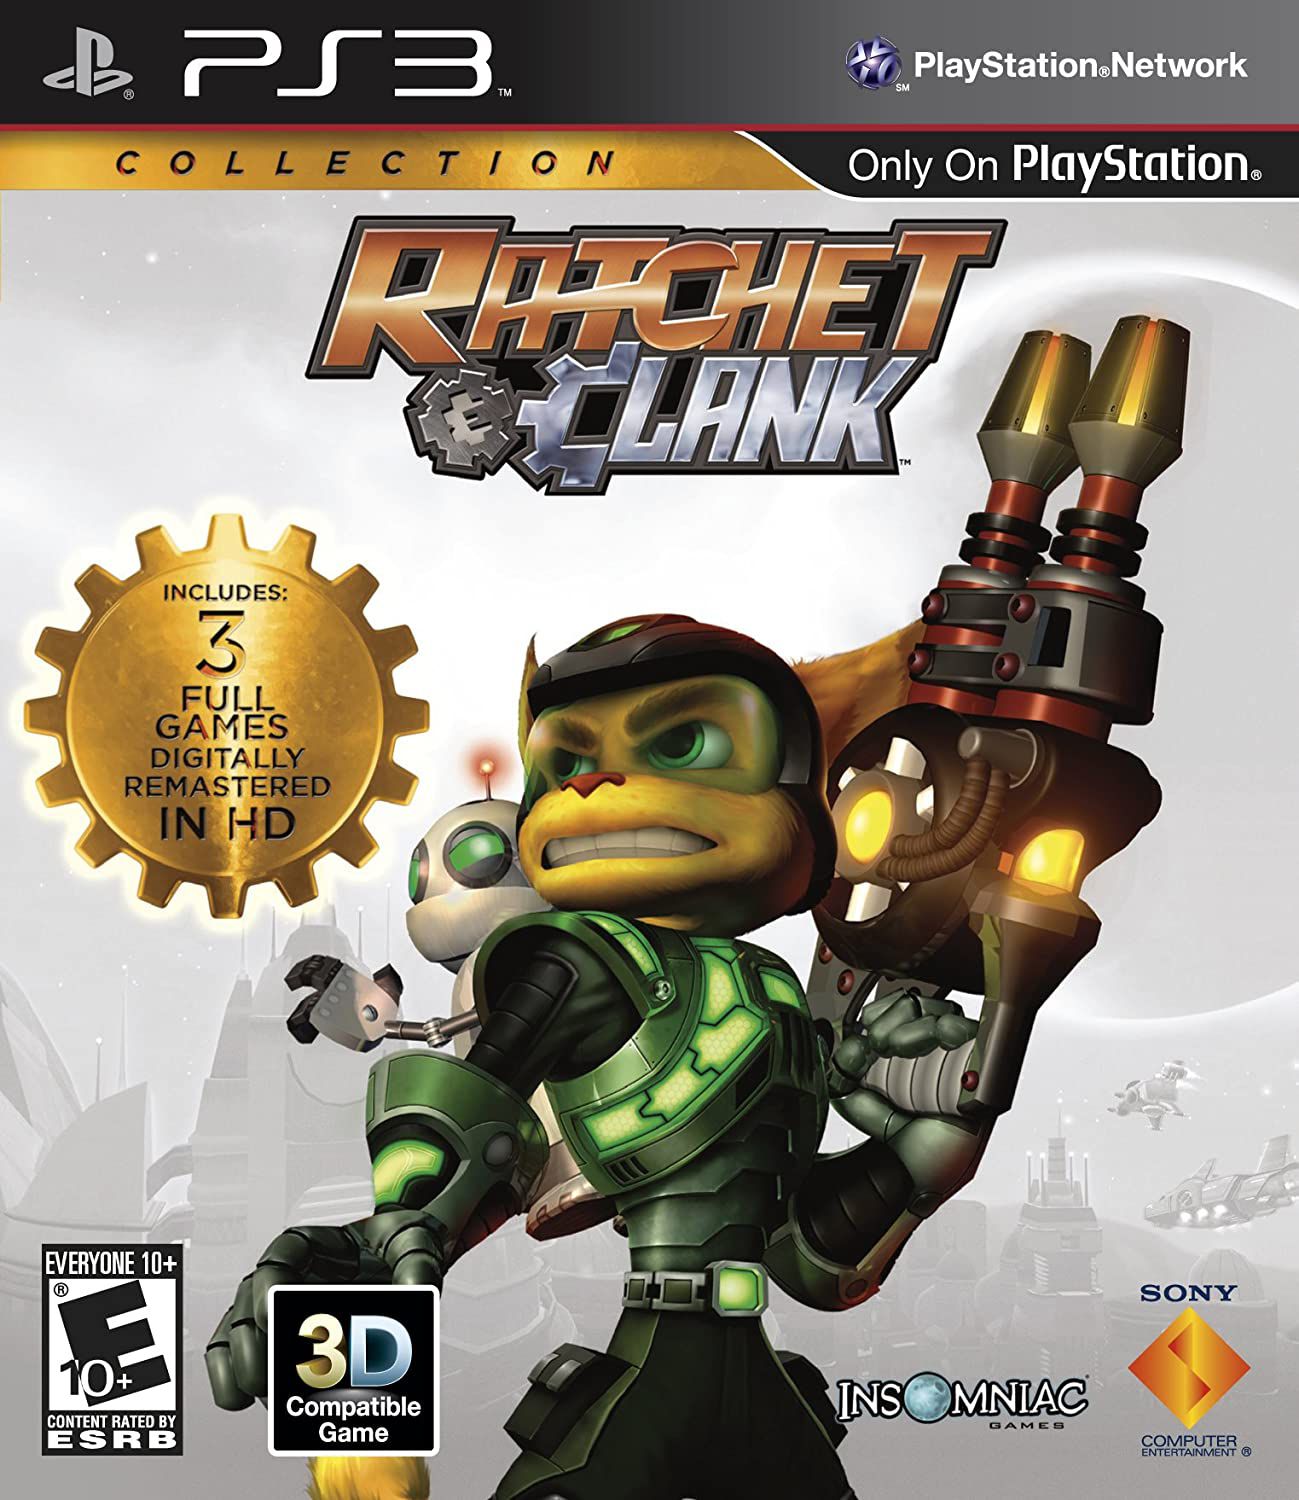 Ratchet & Clank - PS4 - Sony Computer Entertainment - Jogos de